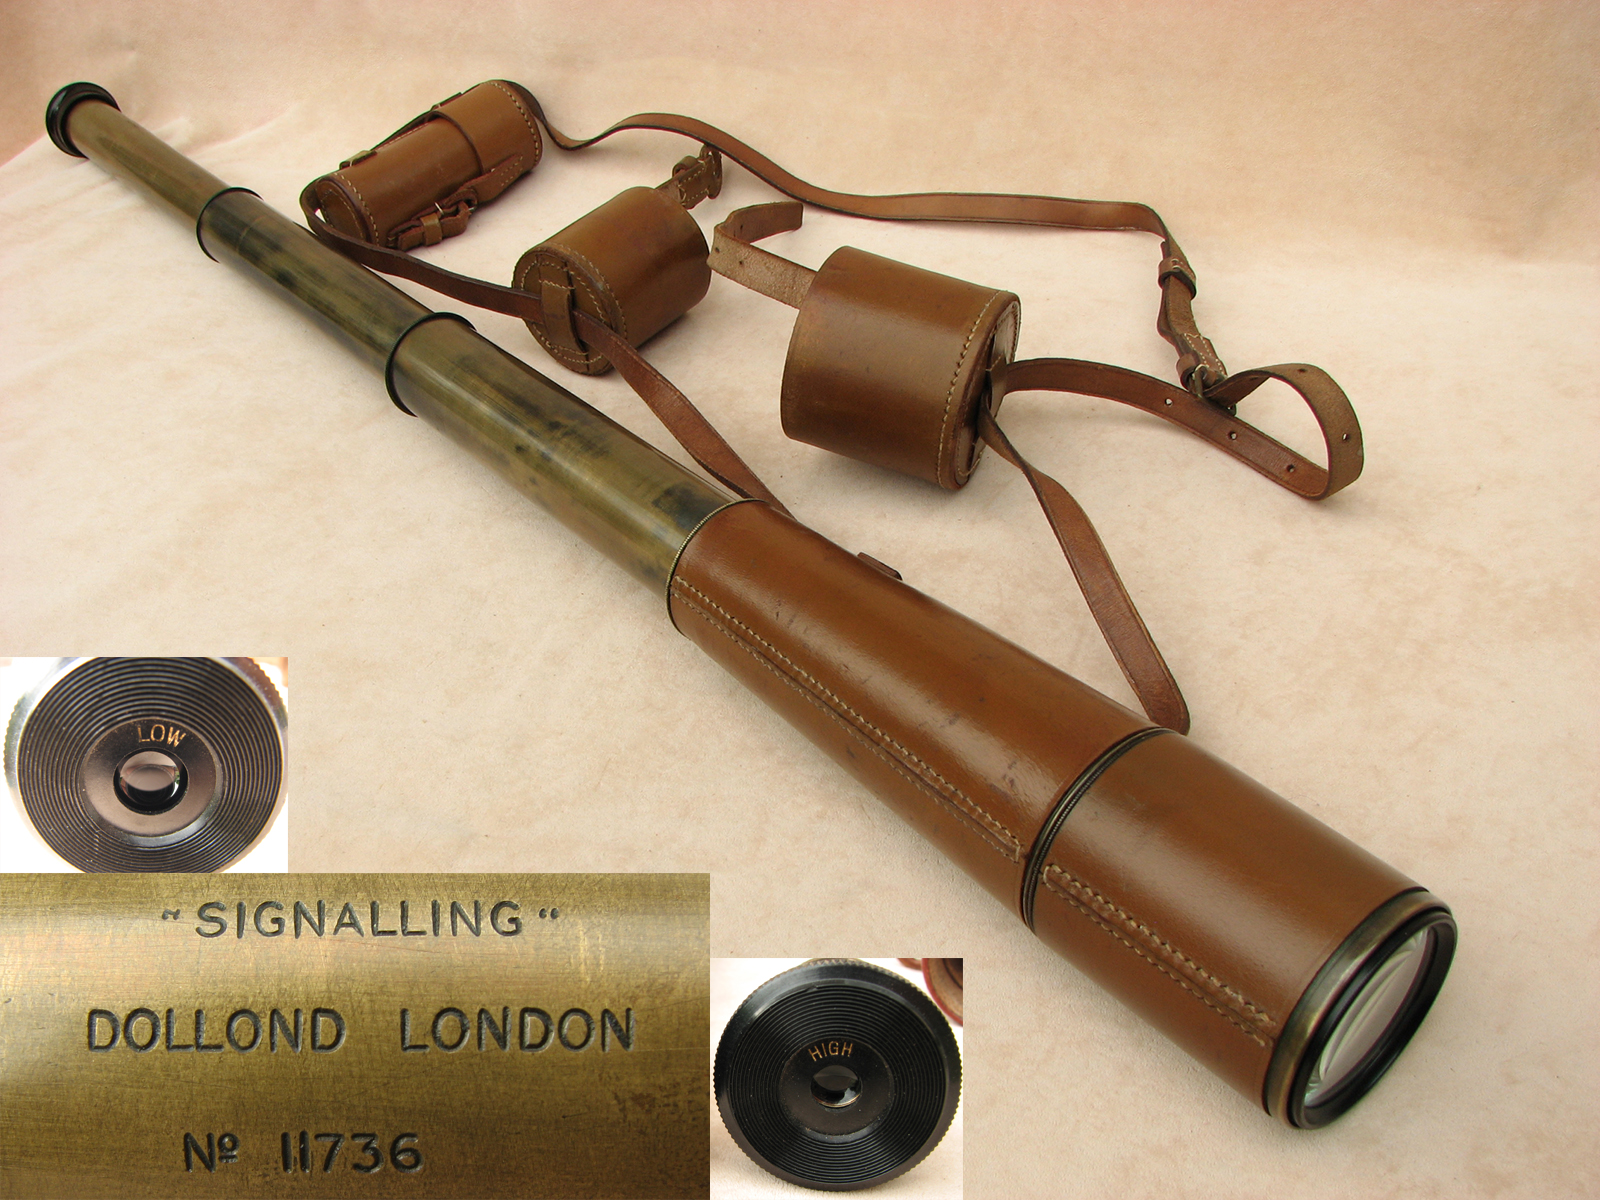 Post WW1 signalling telescope by Dollond London